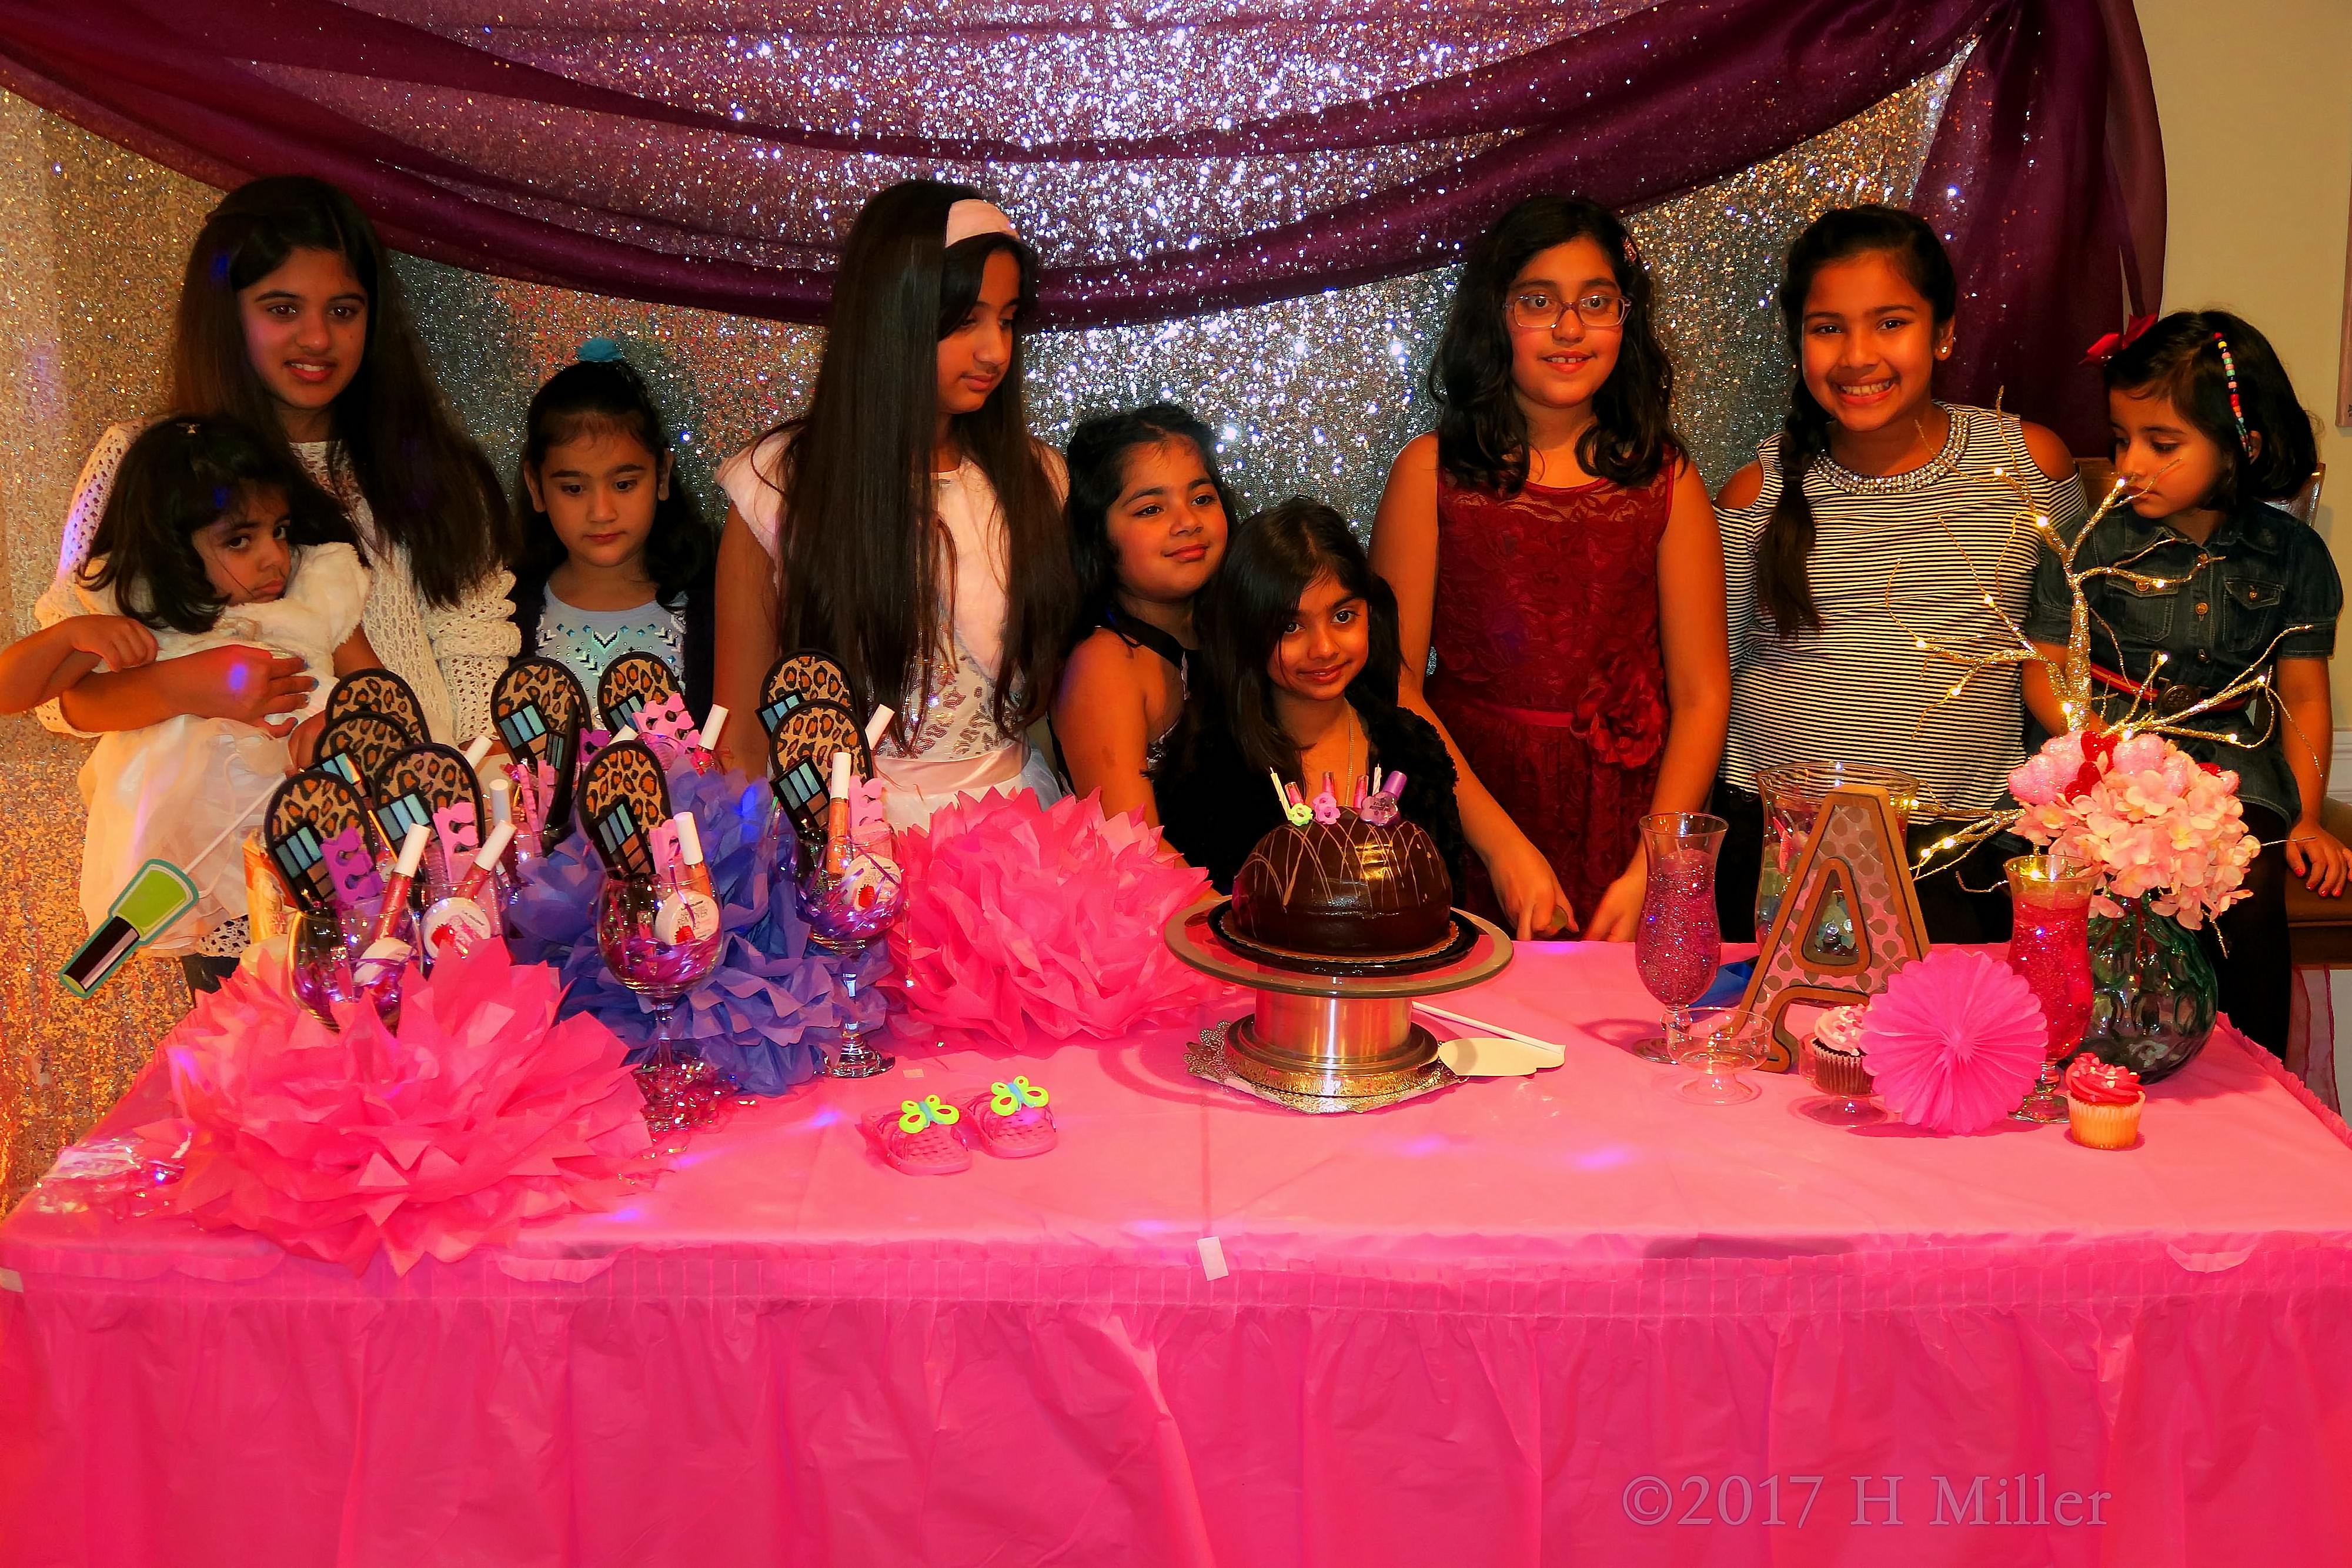 Group Photo Behind The Spa Birthday Cake. 